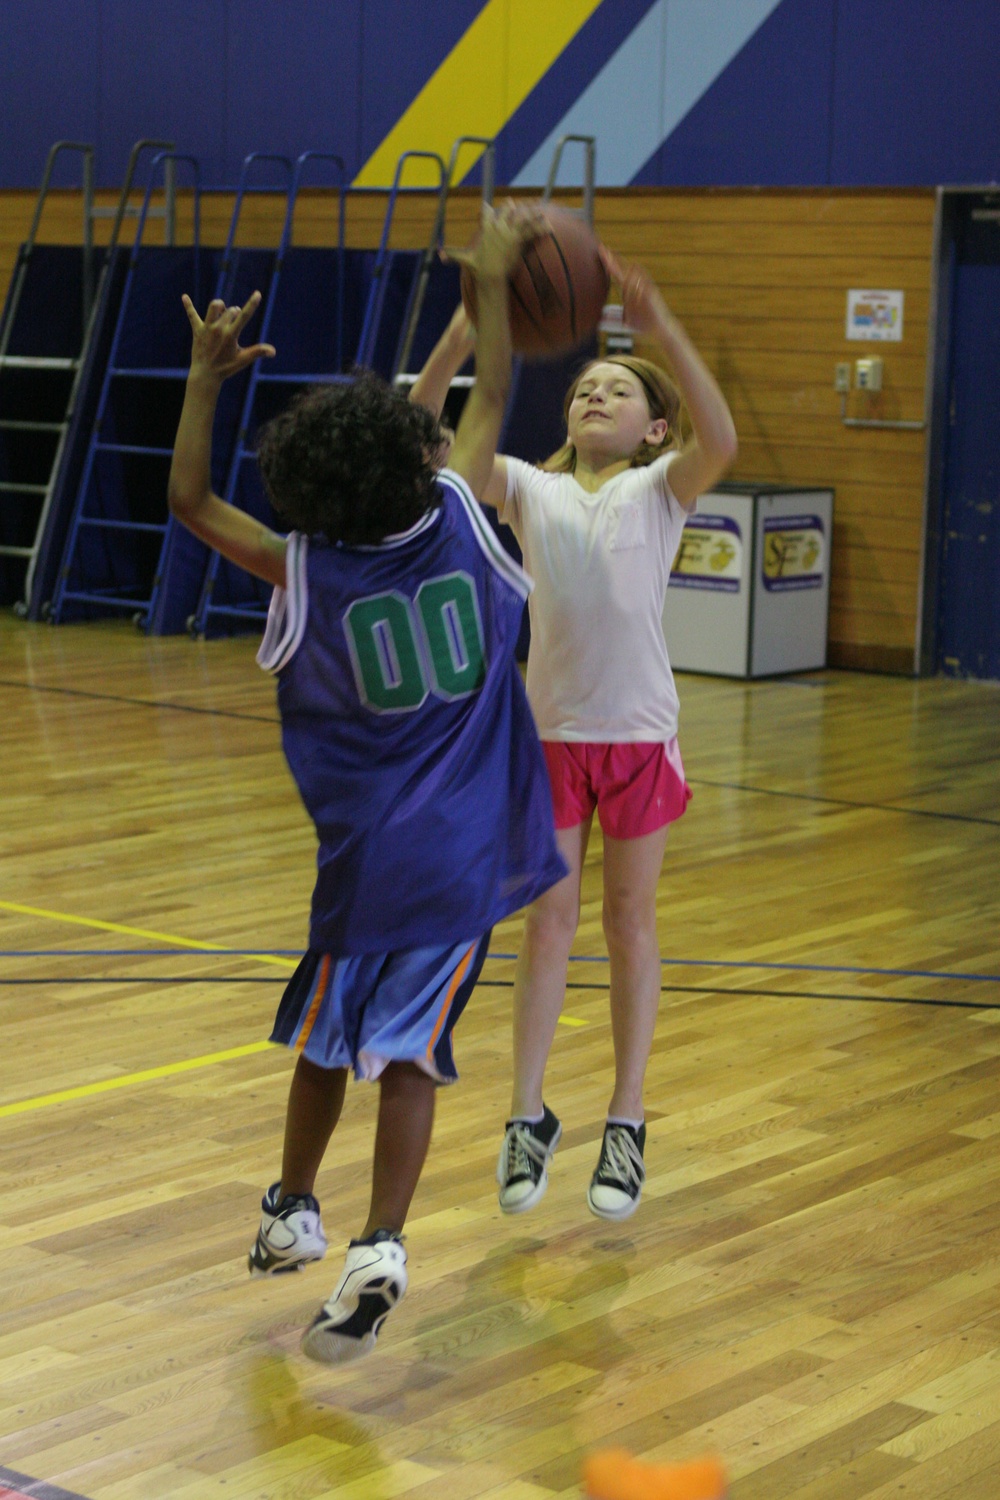 Sports camps teach children sportsmanship, fundamentals